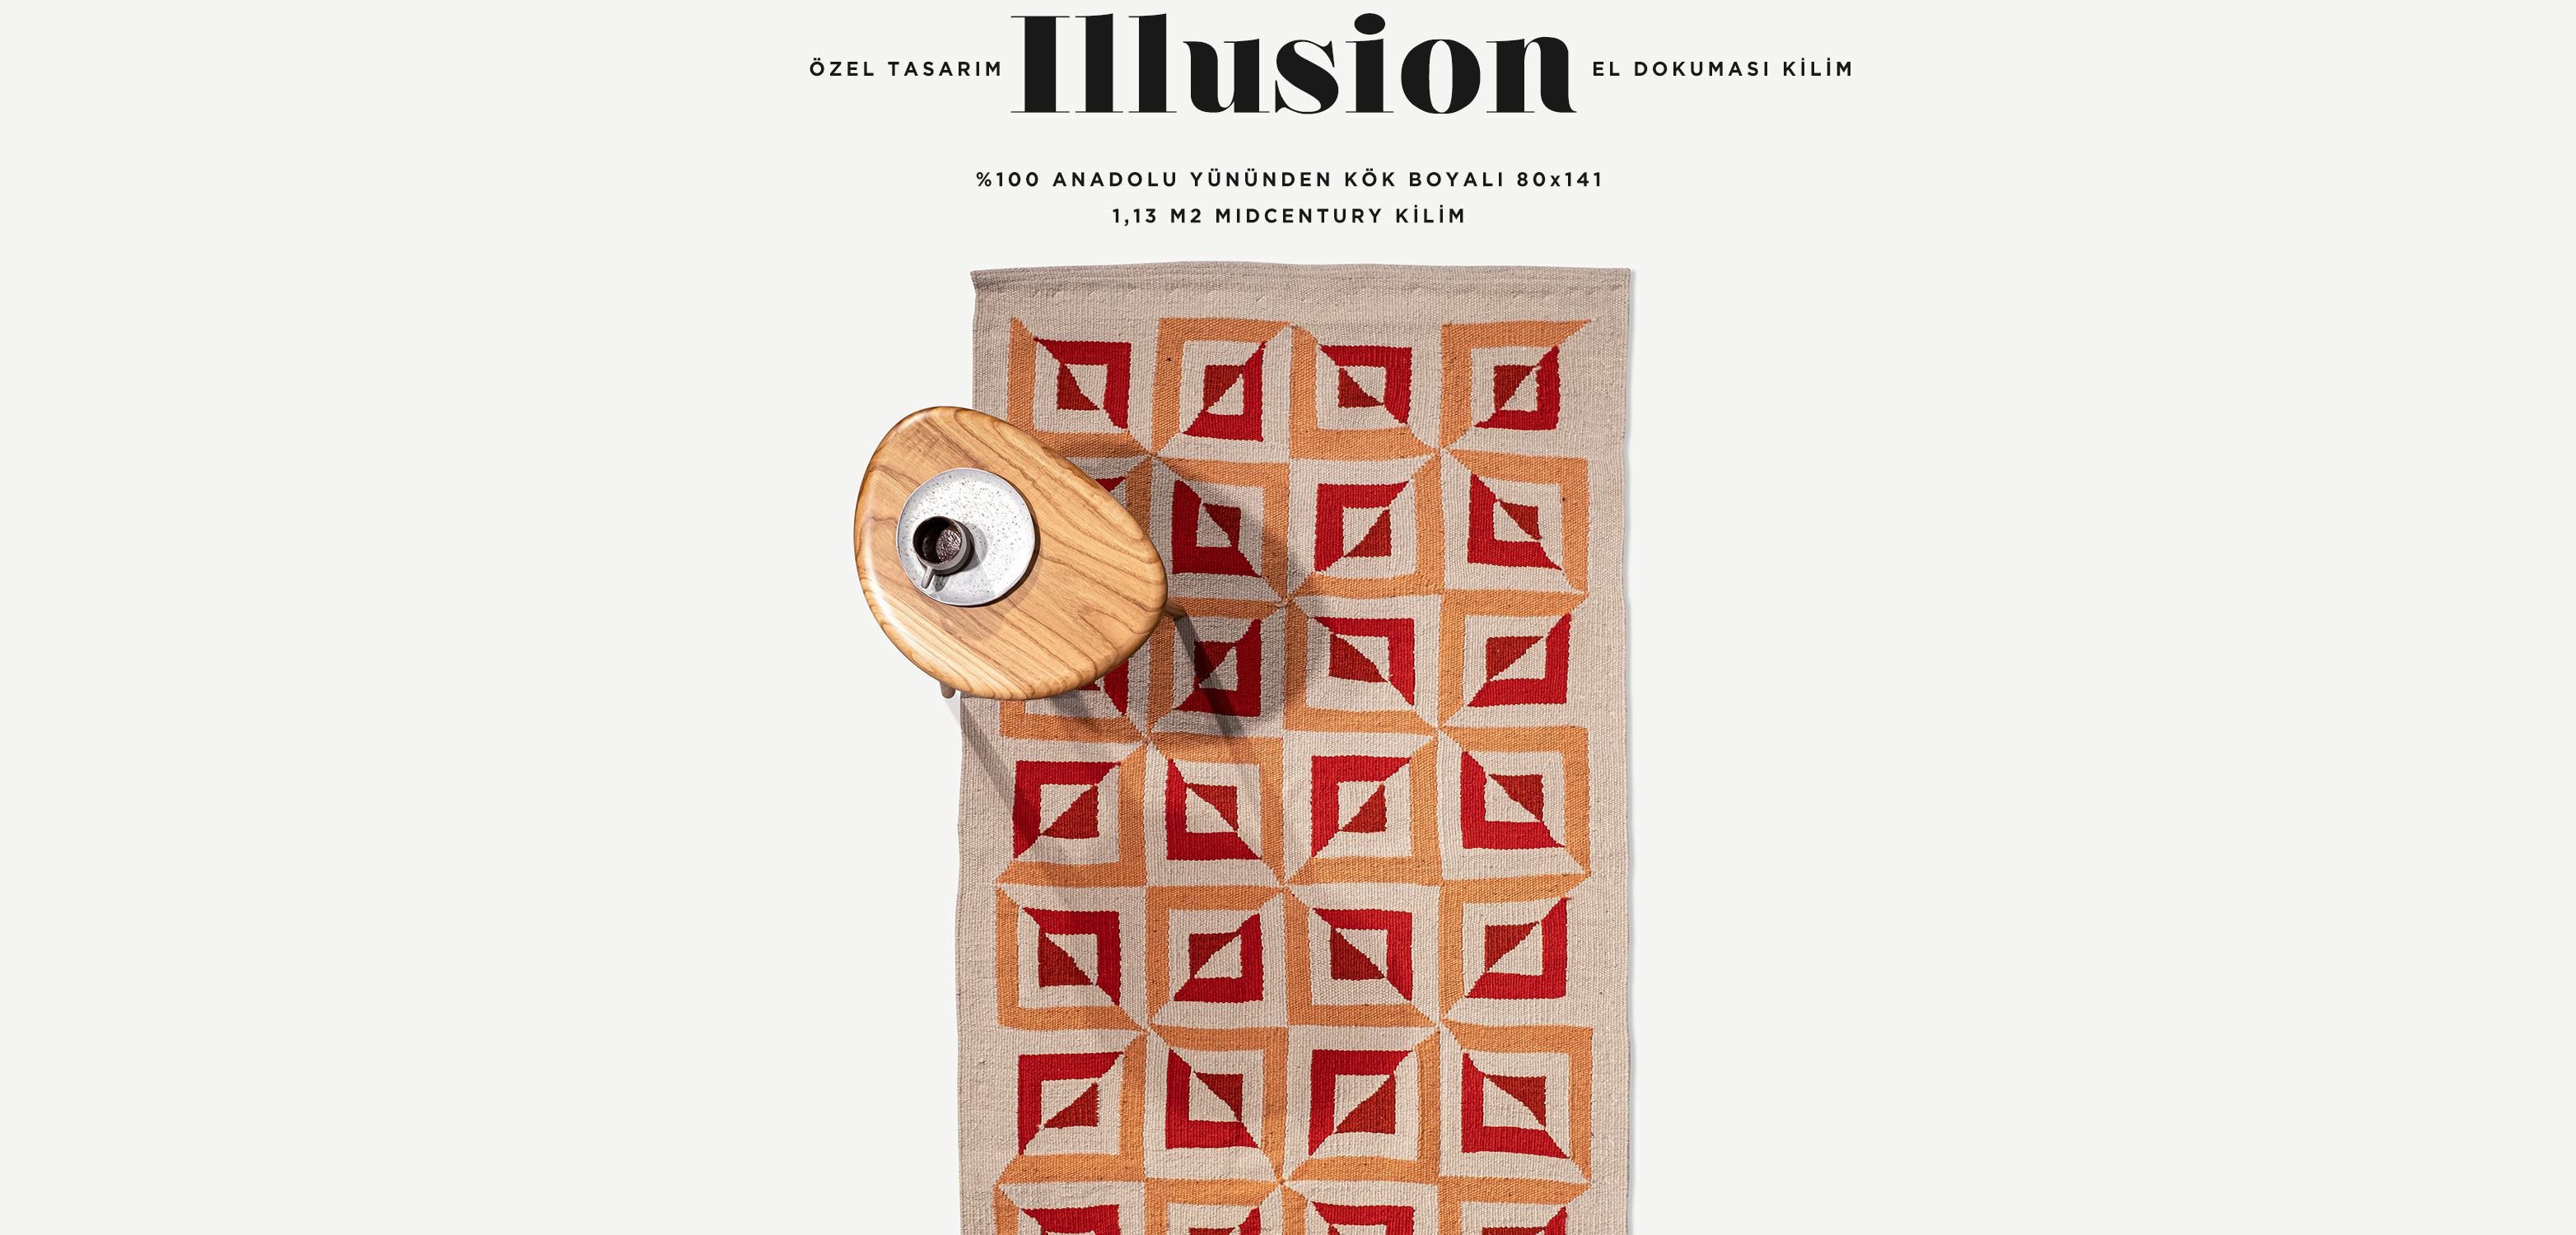 Illusion El Dokuması Kilim 80x141, 1,13 m2'in resmi